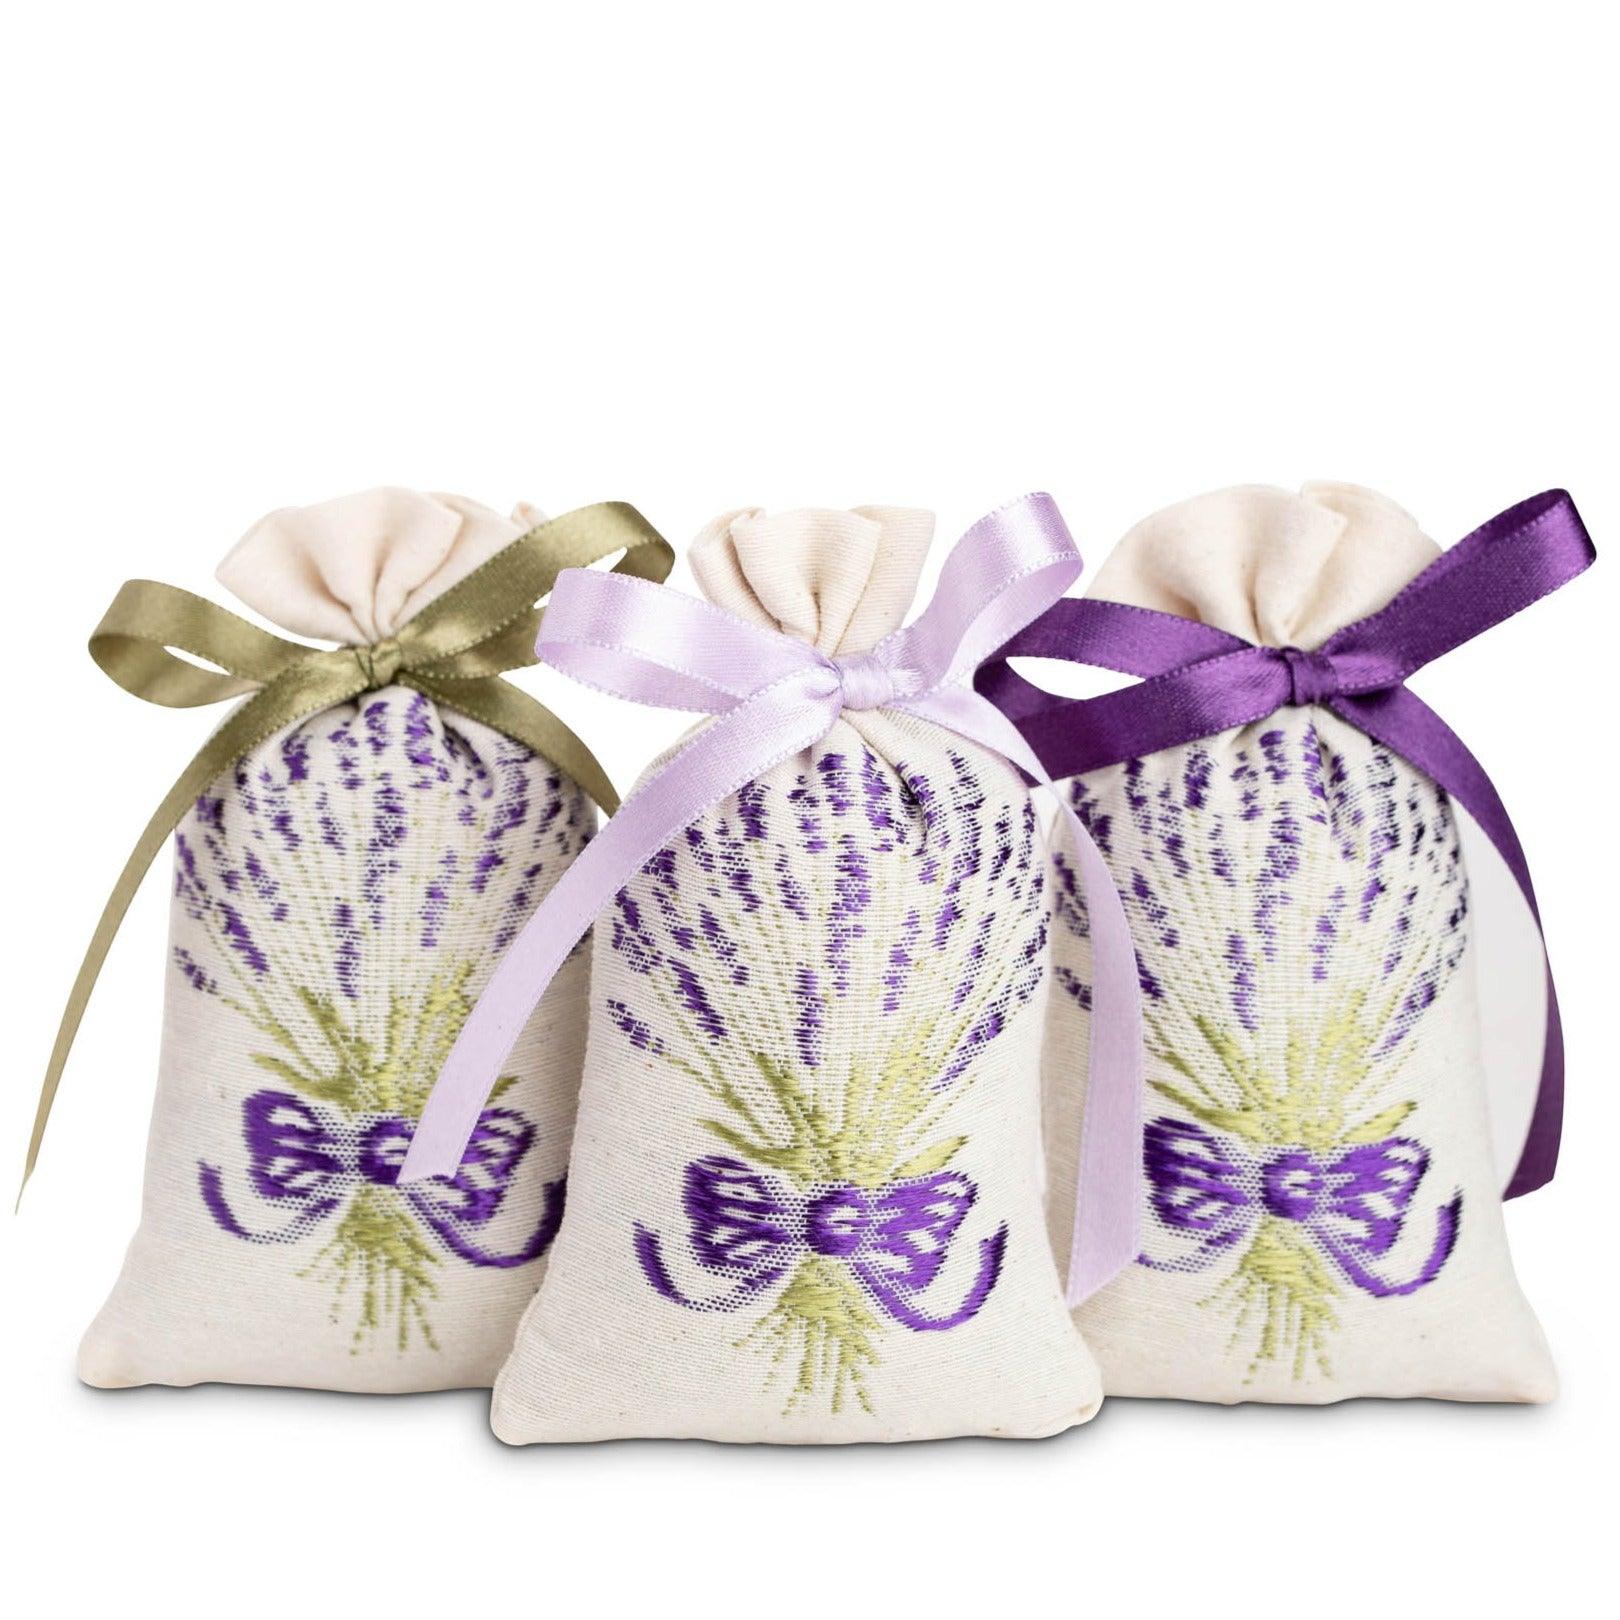 Embroidered lavender sachets set of 3